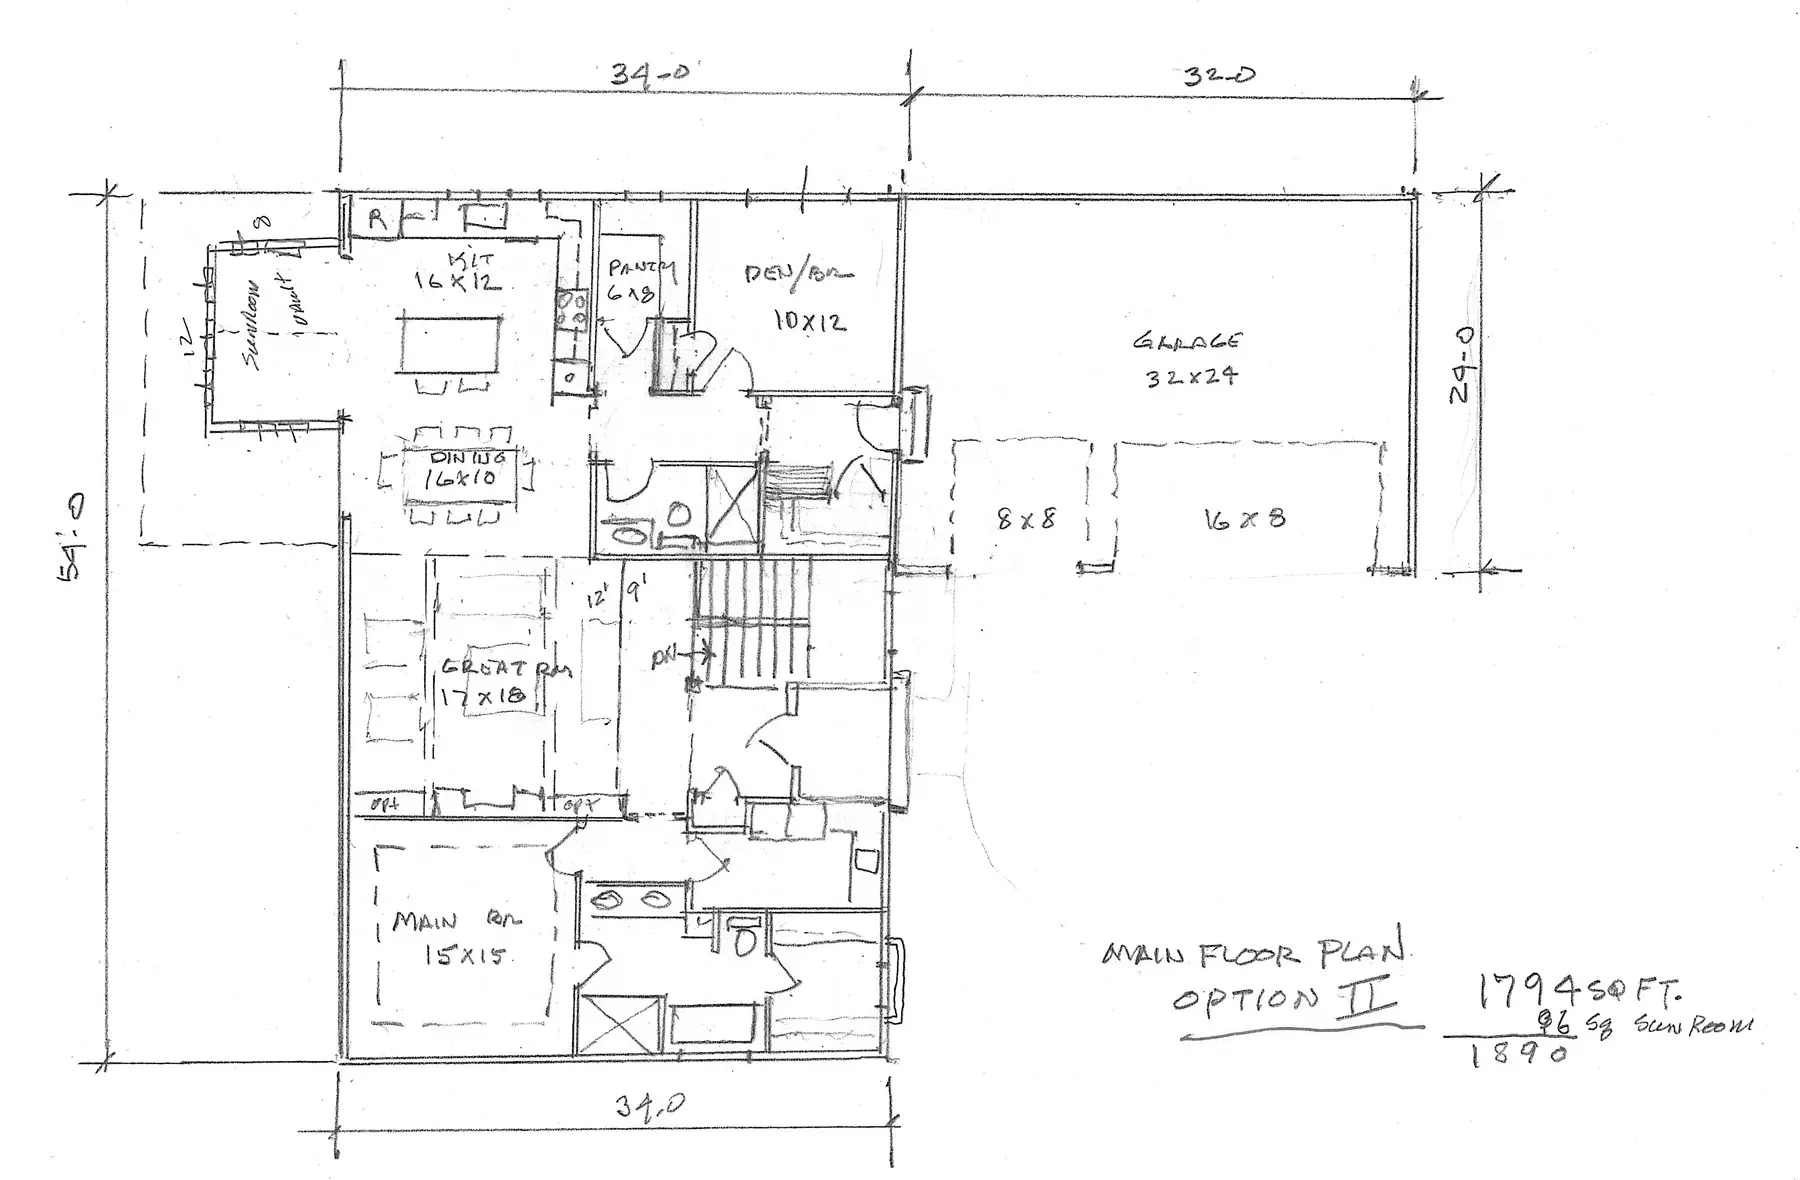 Modern Tudor #1 Home Plan Option II Main Floor Plan